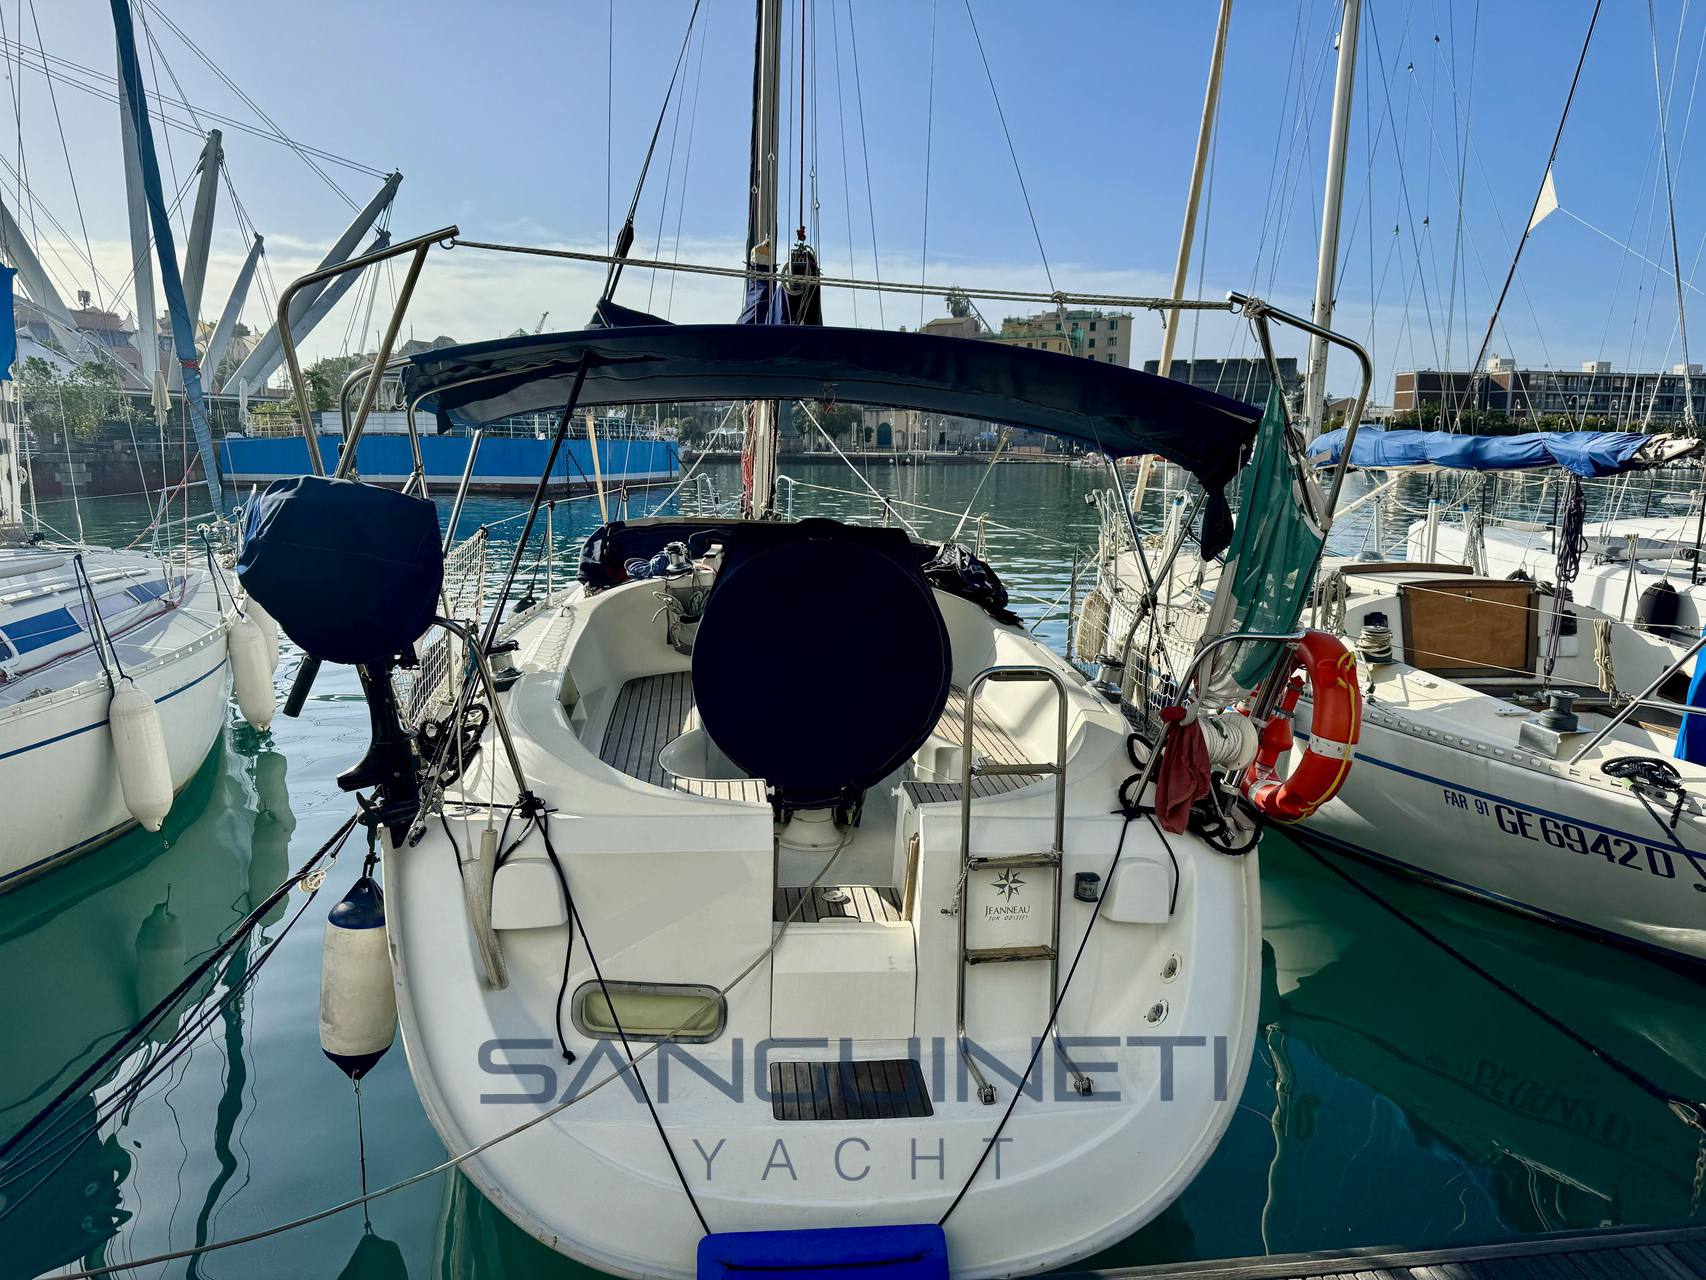 Jeanneau Sun odyssey 32.2 Sailing boat used for sale